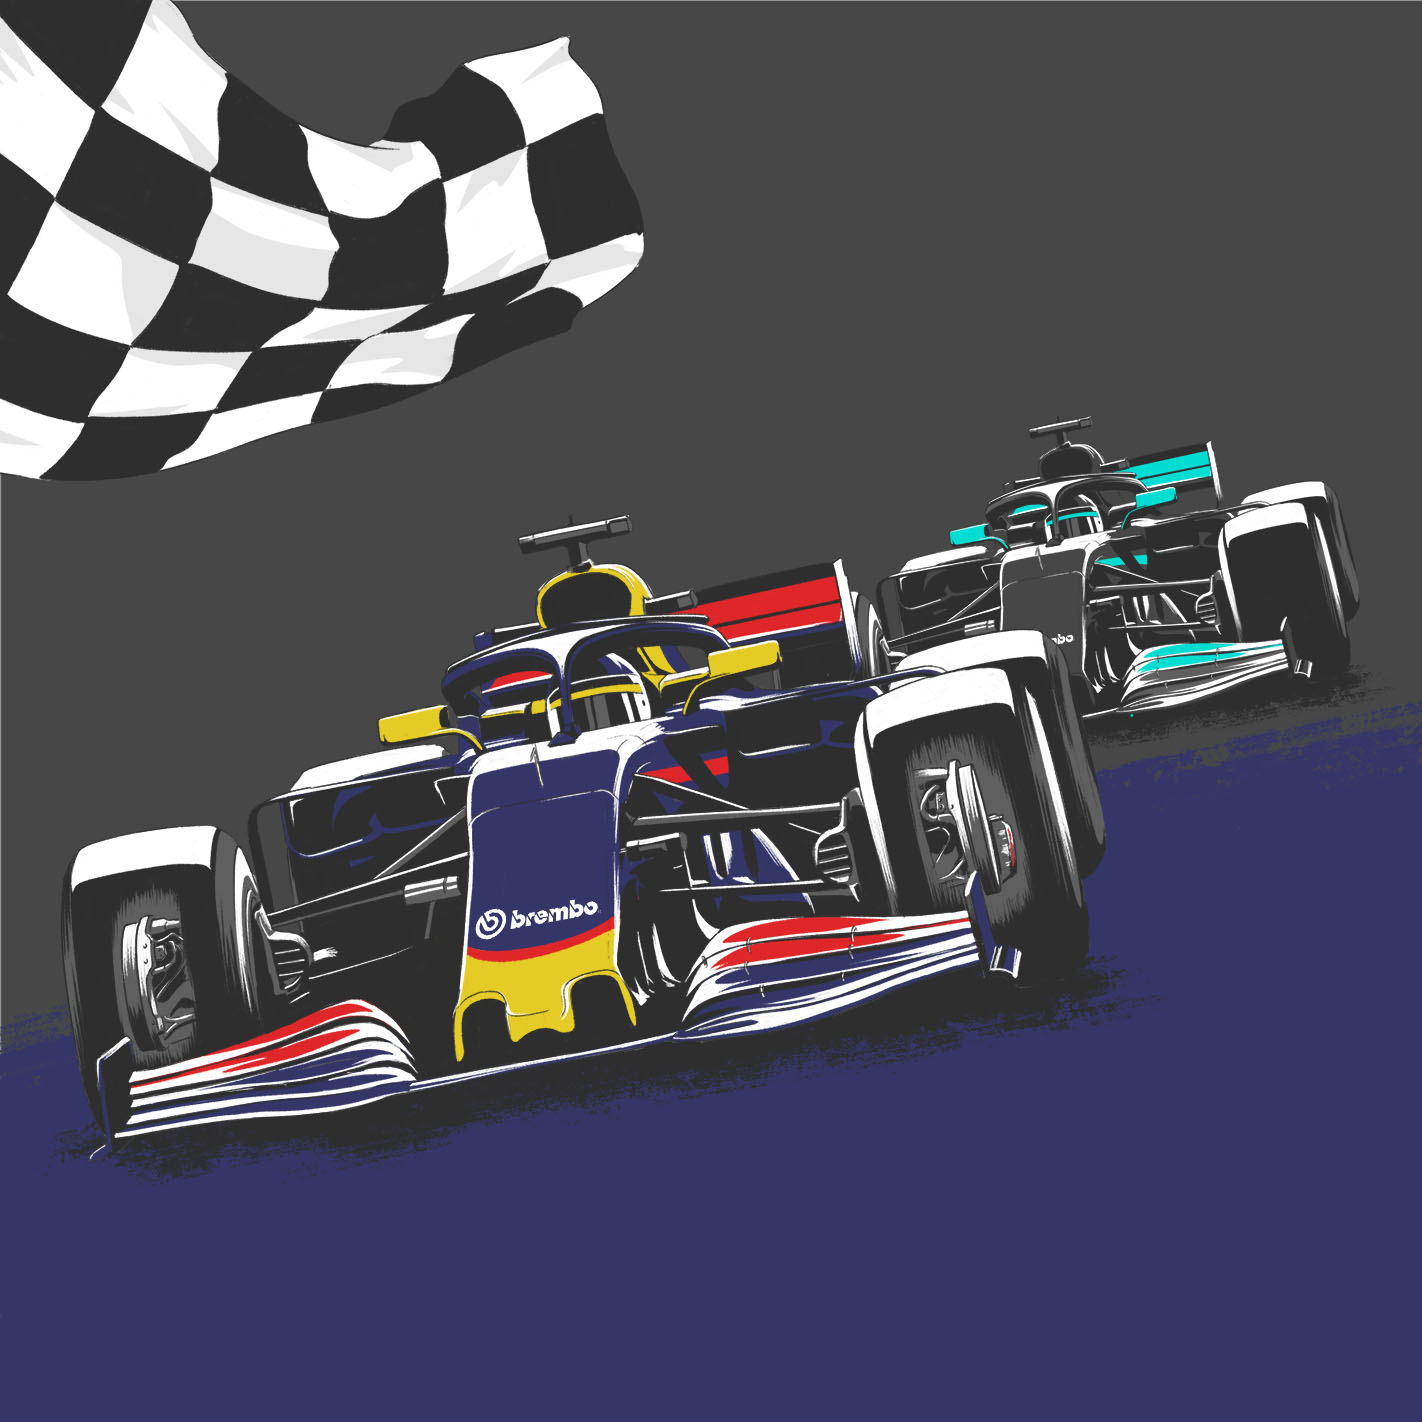 General 1422x1422 Brembo racing illustration Formula 1 digital art